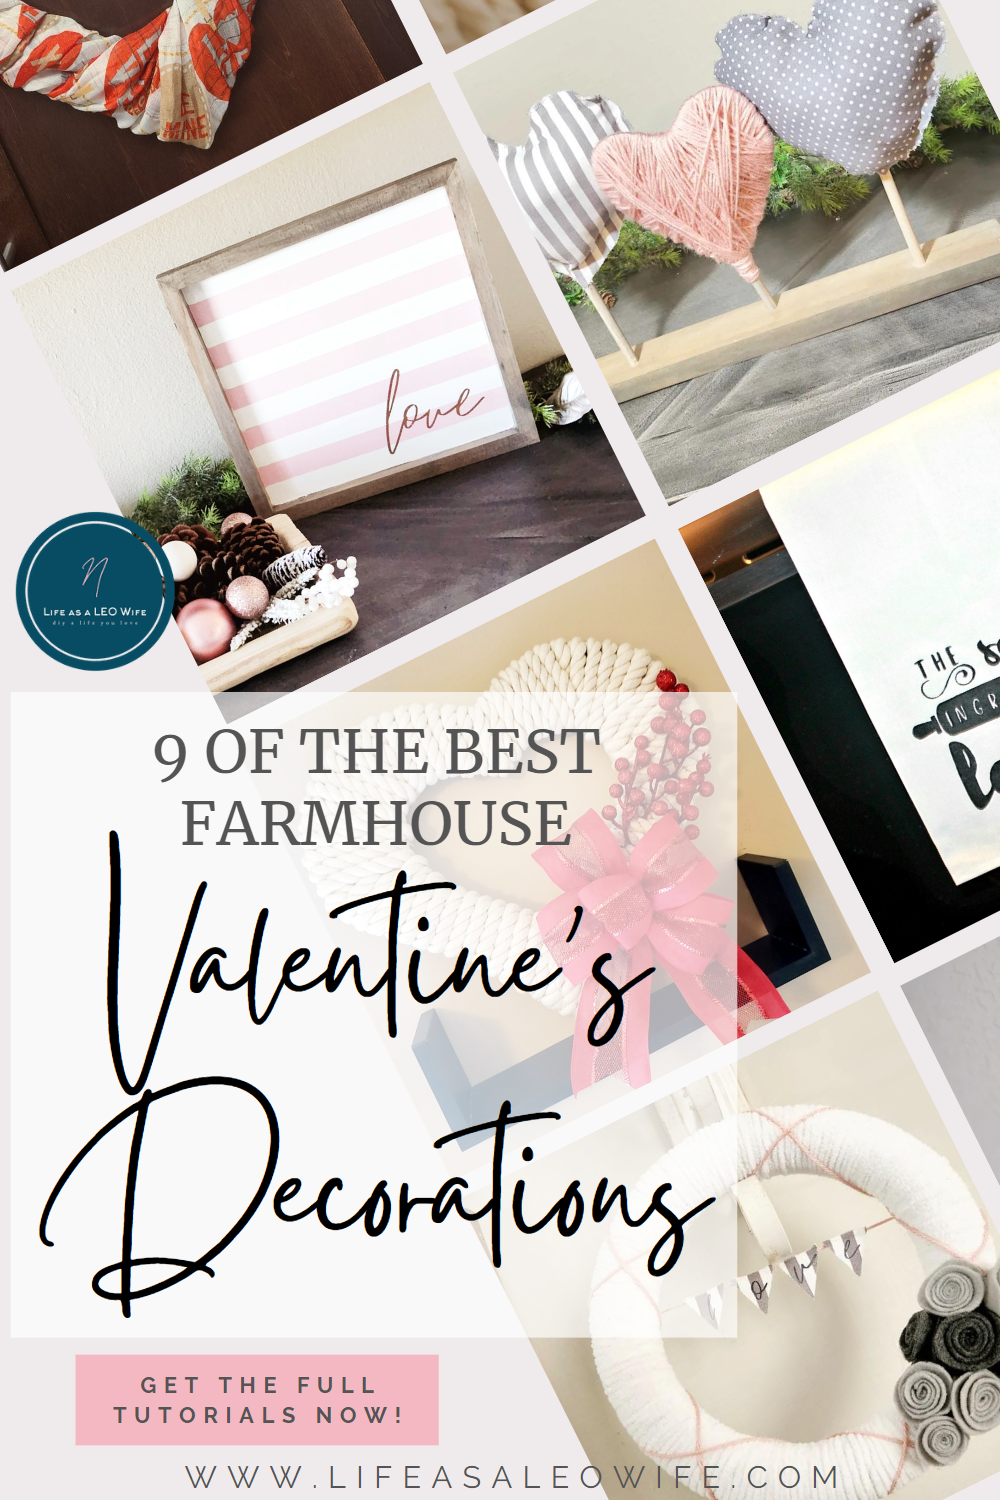 Farmhouse Valentine's decorations roundup Pinterest image